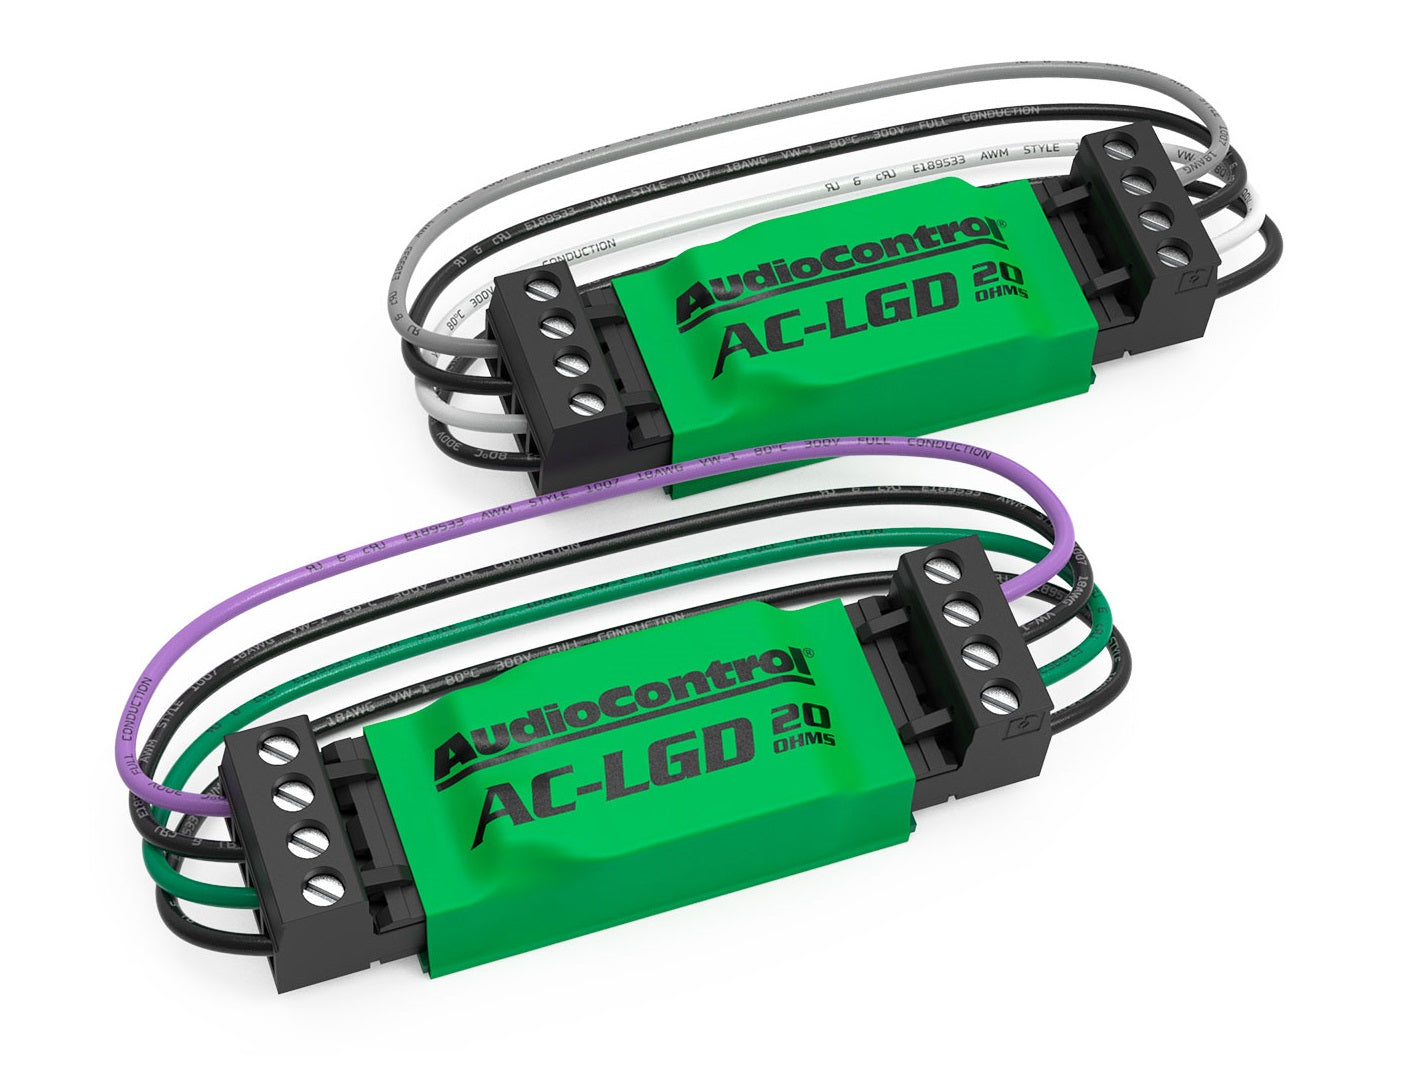 AudioControl AC-LGD 20 - Plugged IN